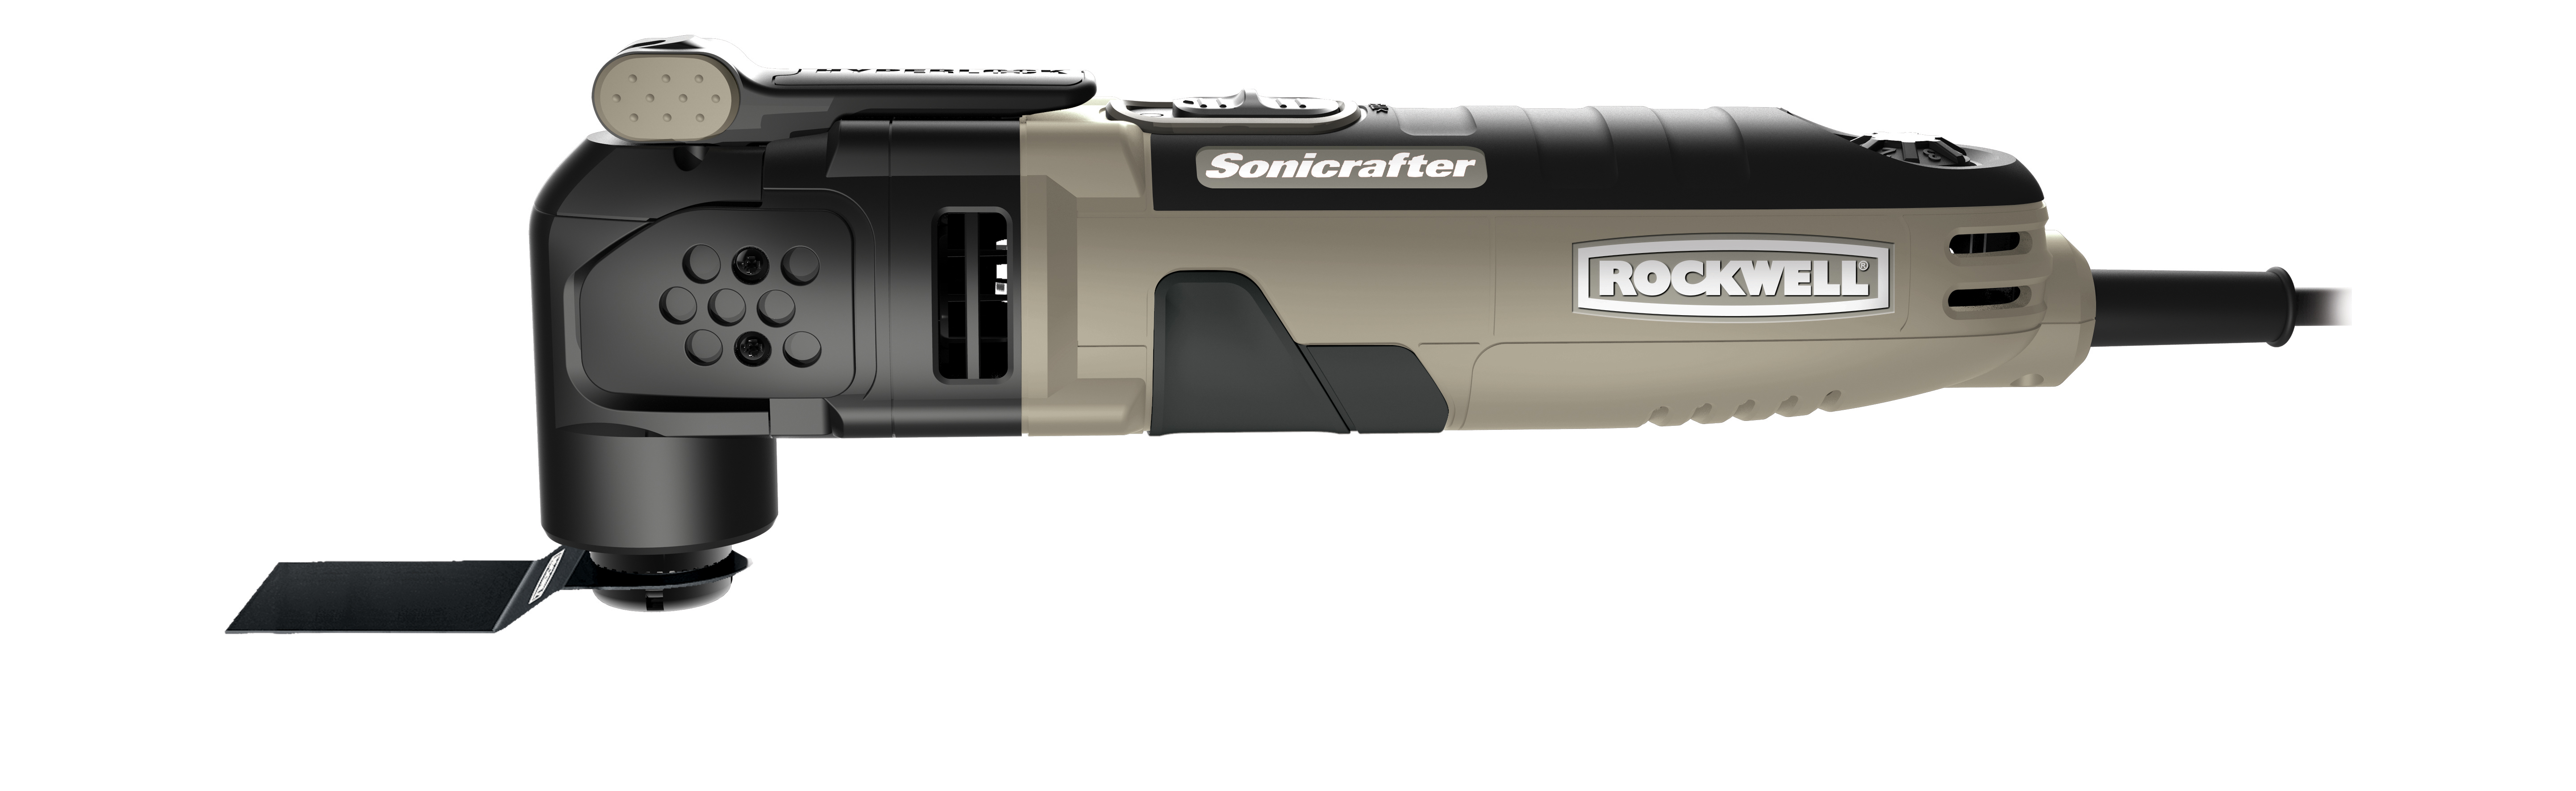 Rockwell Sonicrafter, Model RK5121K